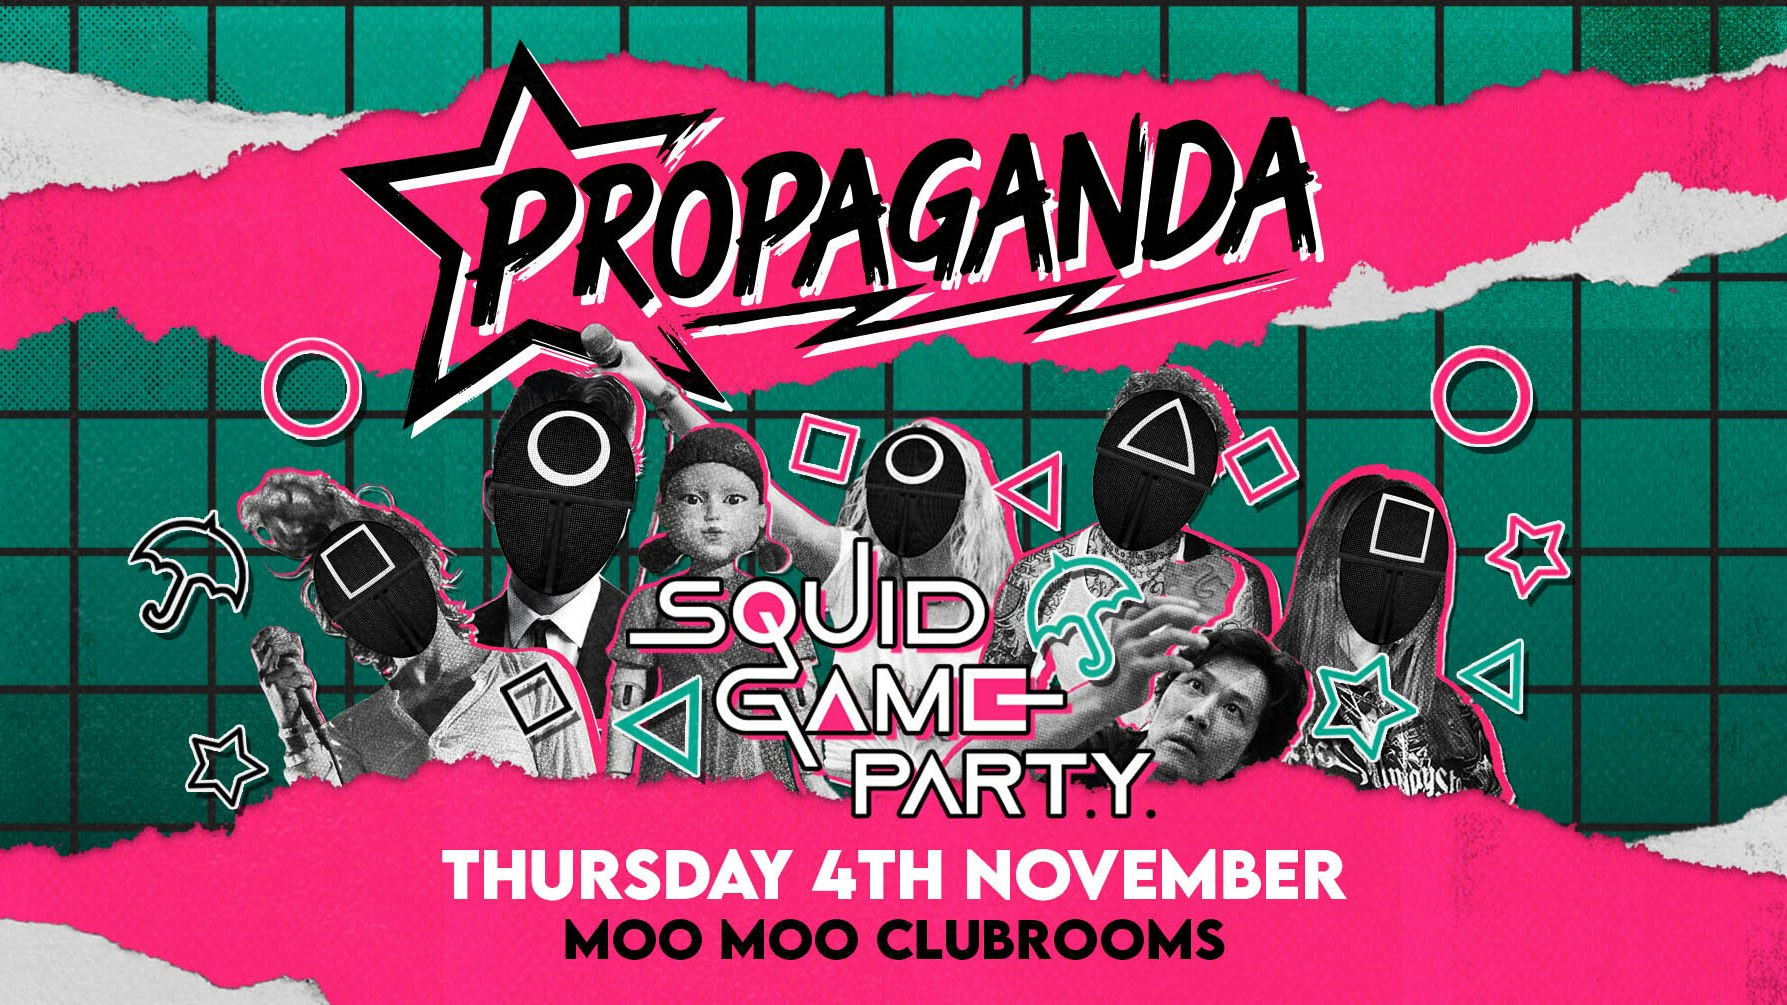 Propaganda Cheltenham – Squid Game Party!